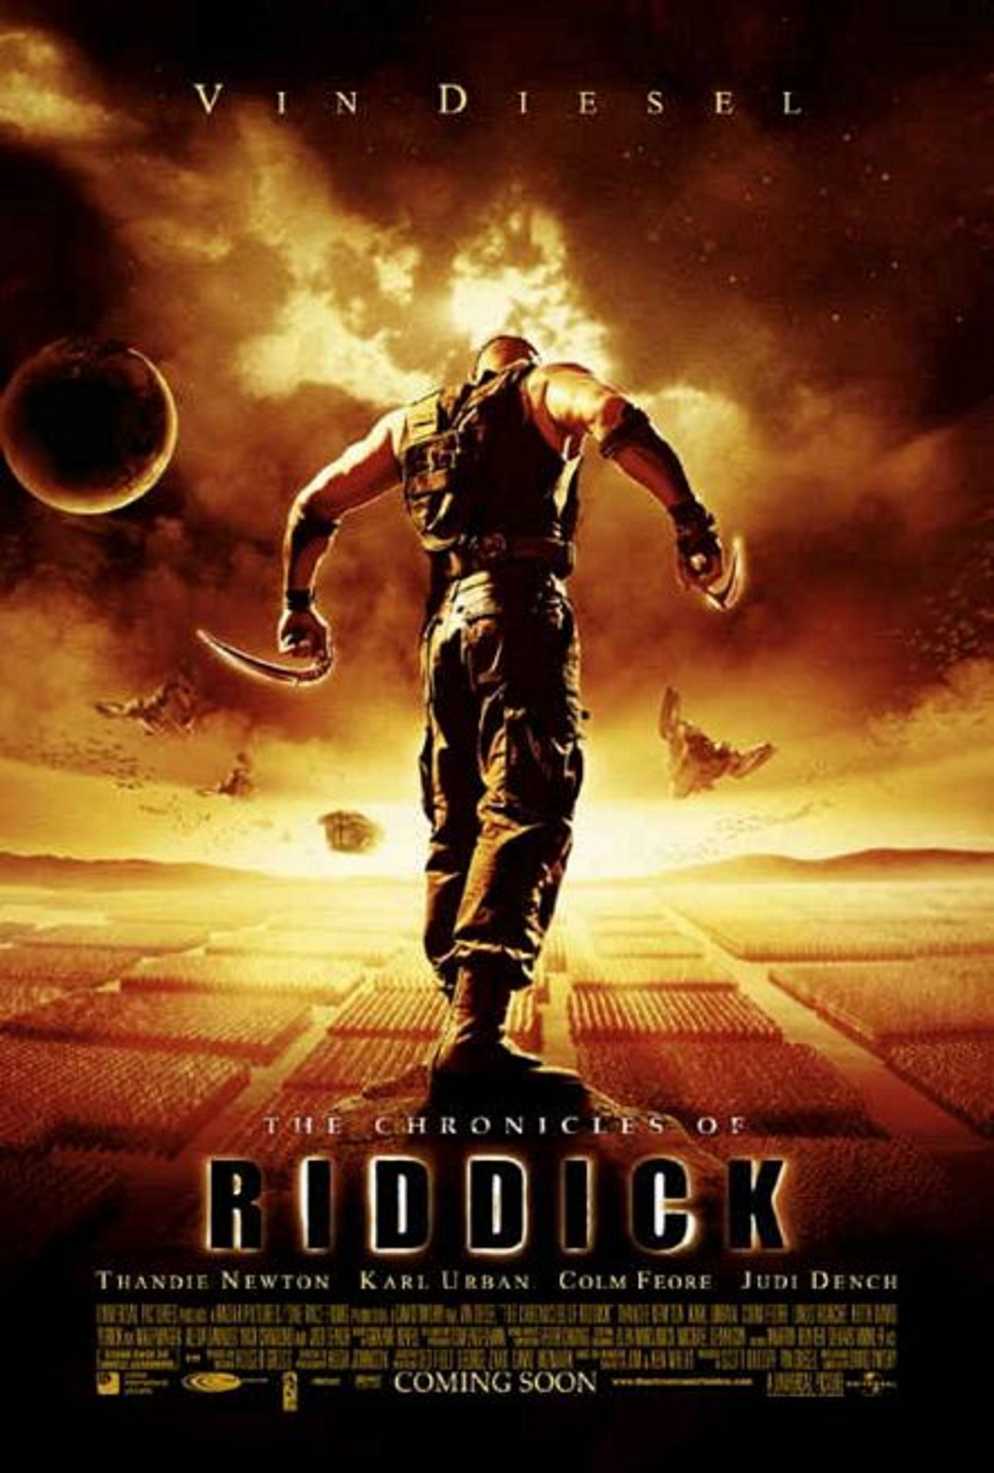 Huyền Thoại Riddick The Chronicles Of Riddick.Diễn Viên: Shiro,The Giant,And The Castle Of Ice